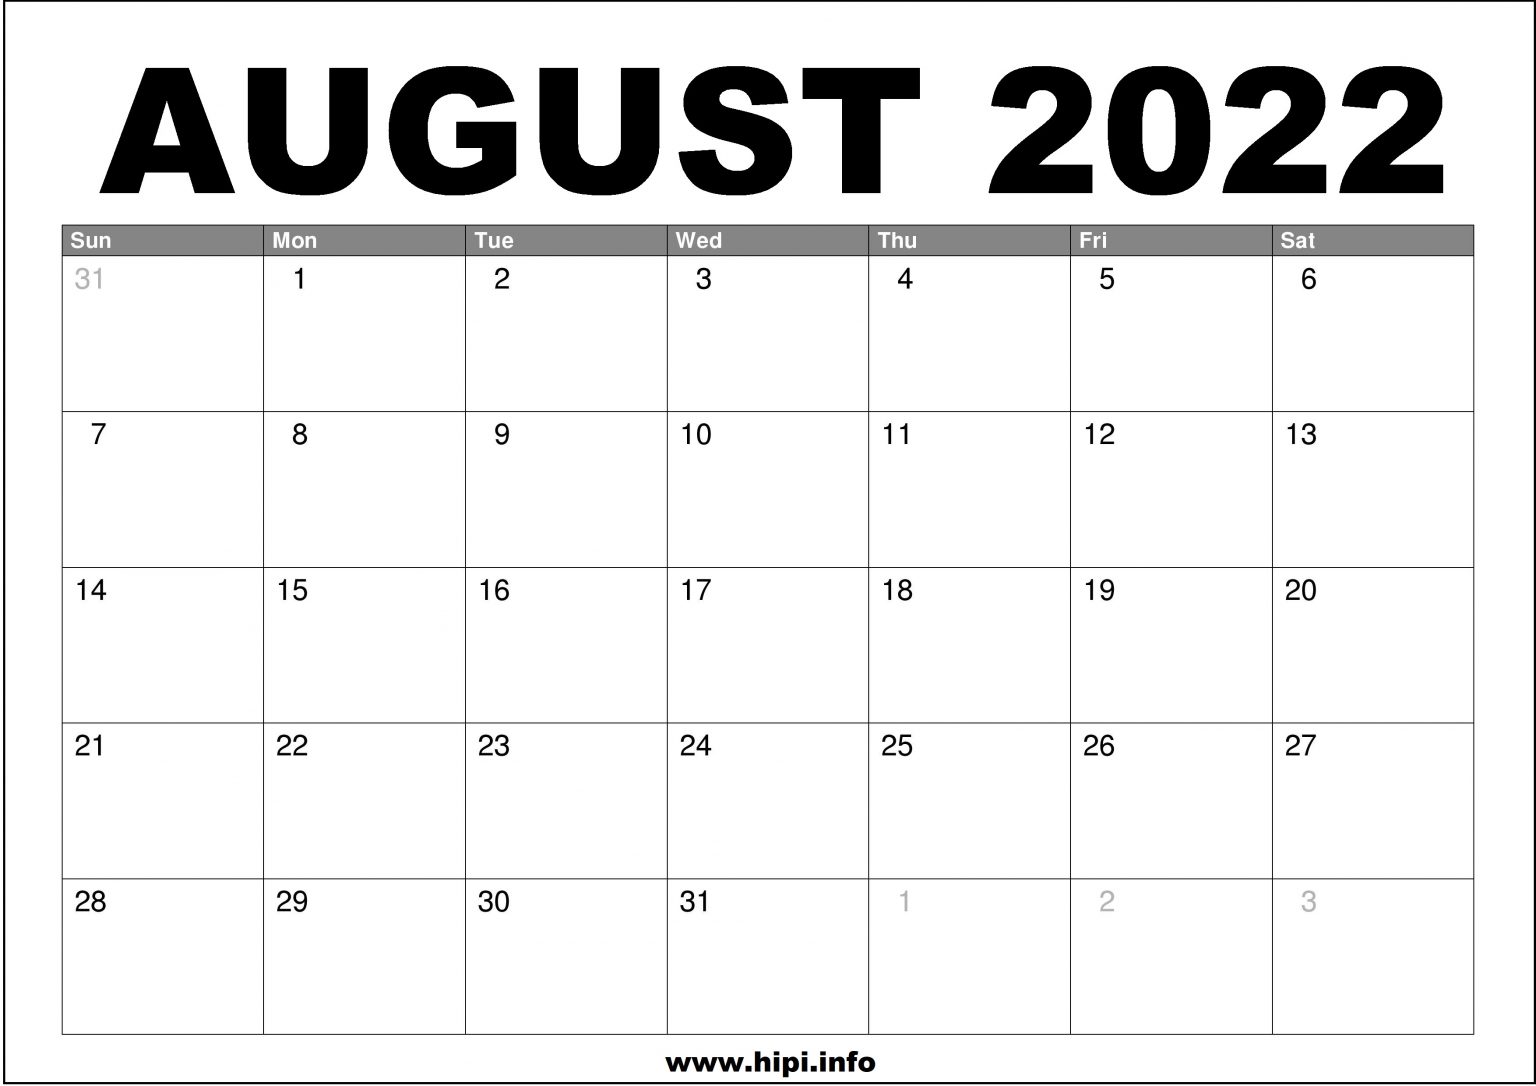 august-2022-calendar-printable-free-hipi-info